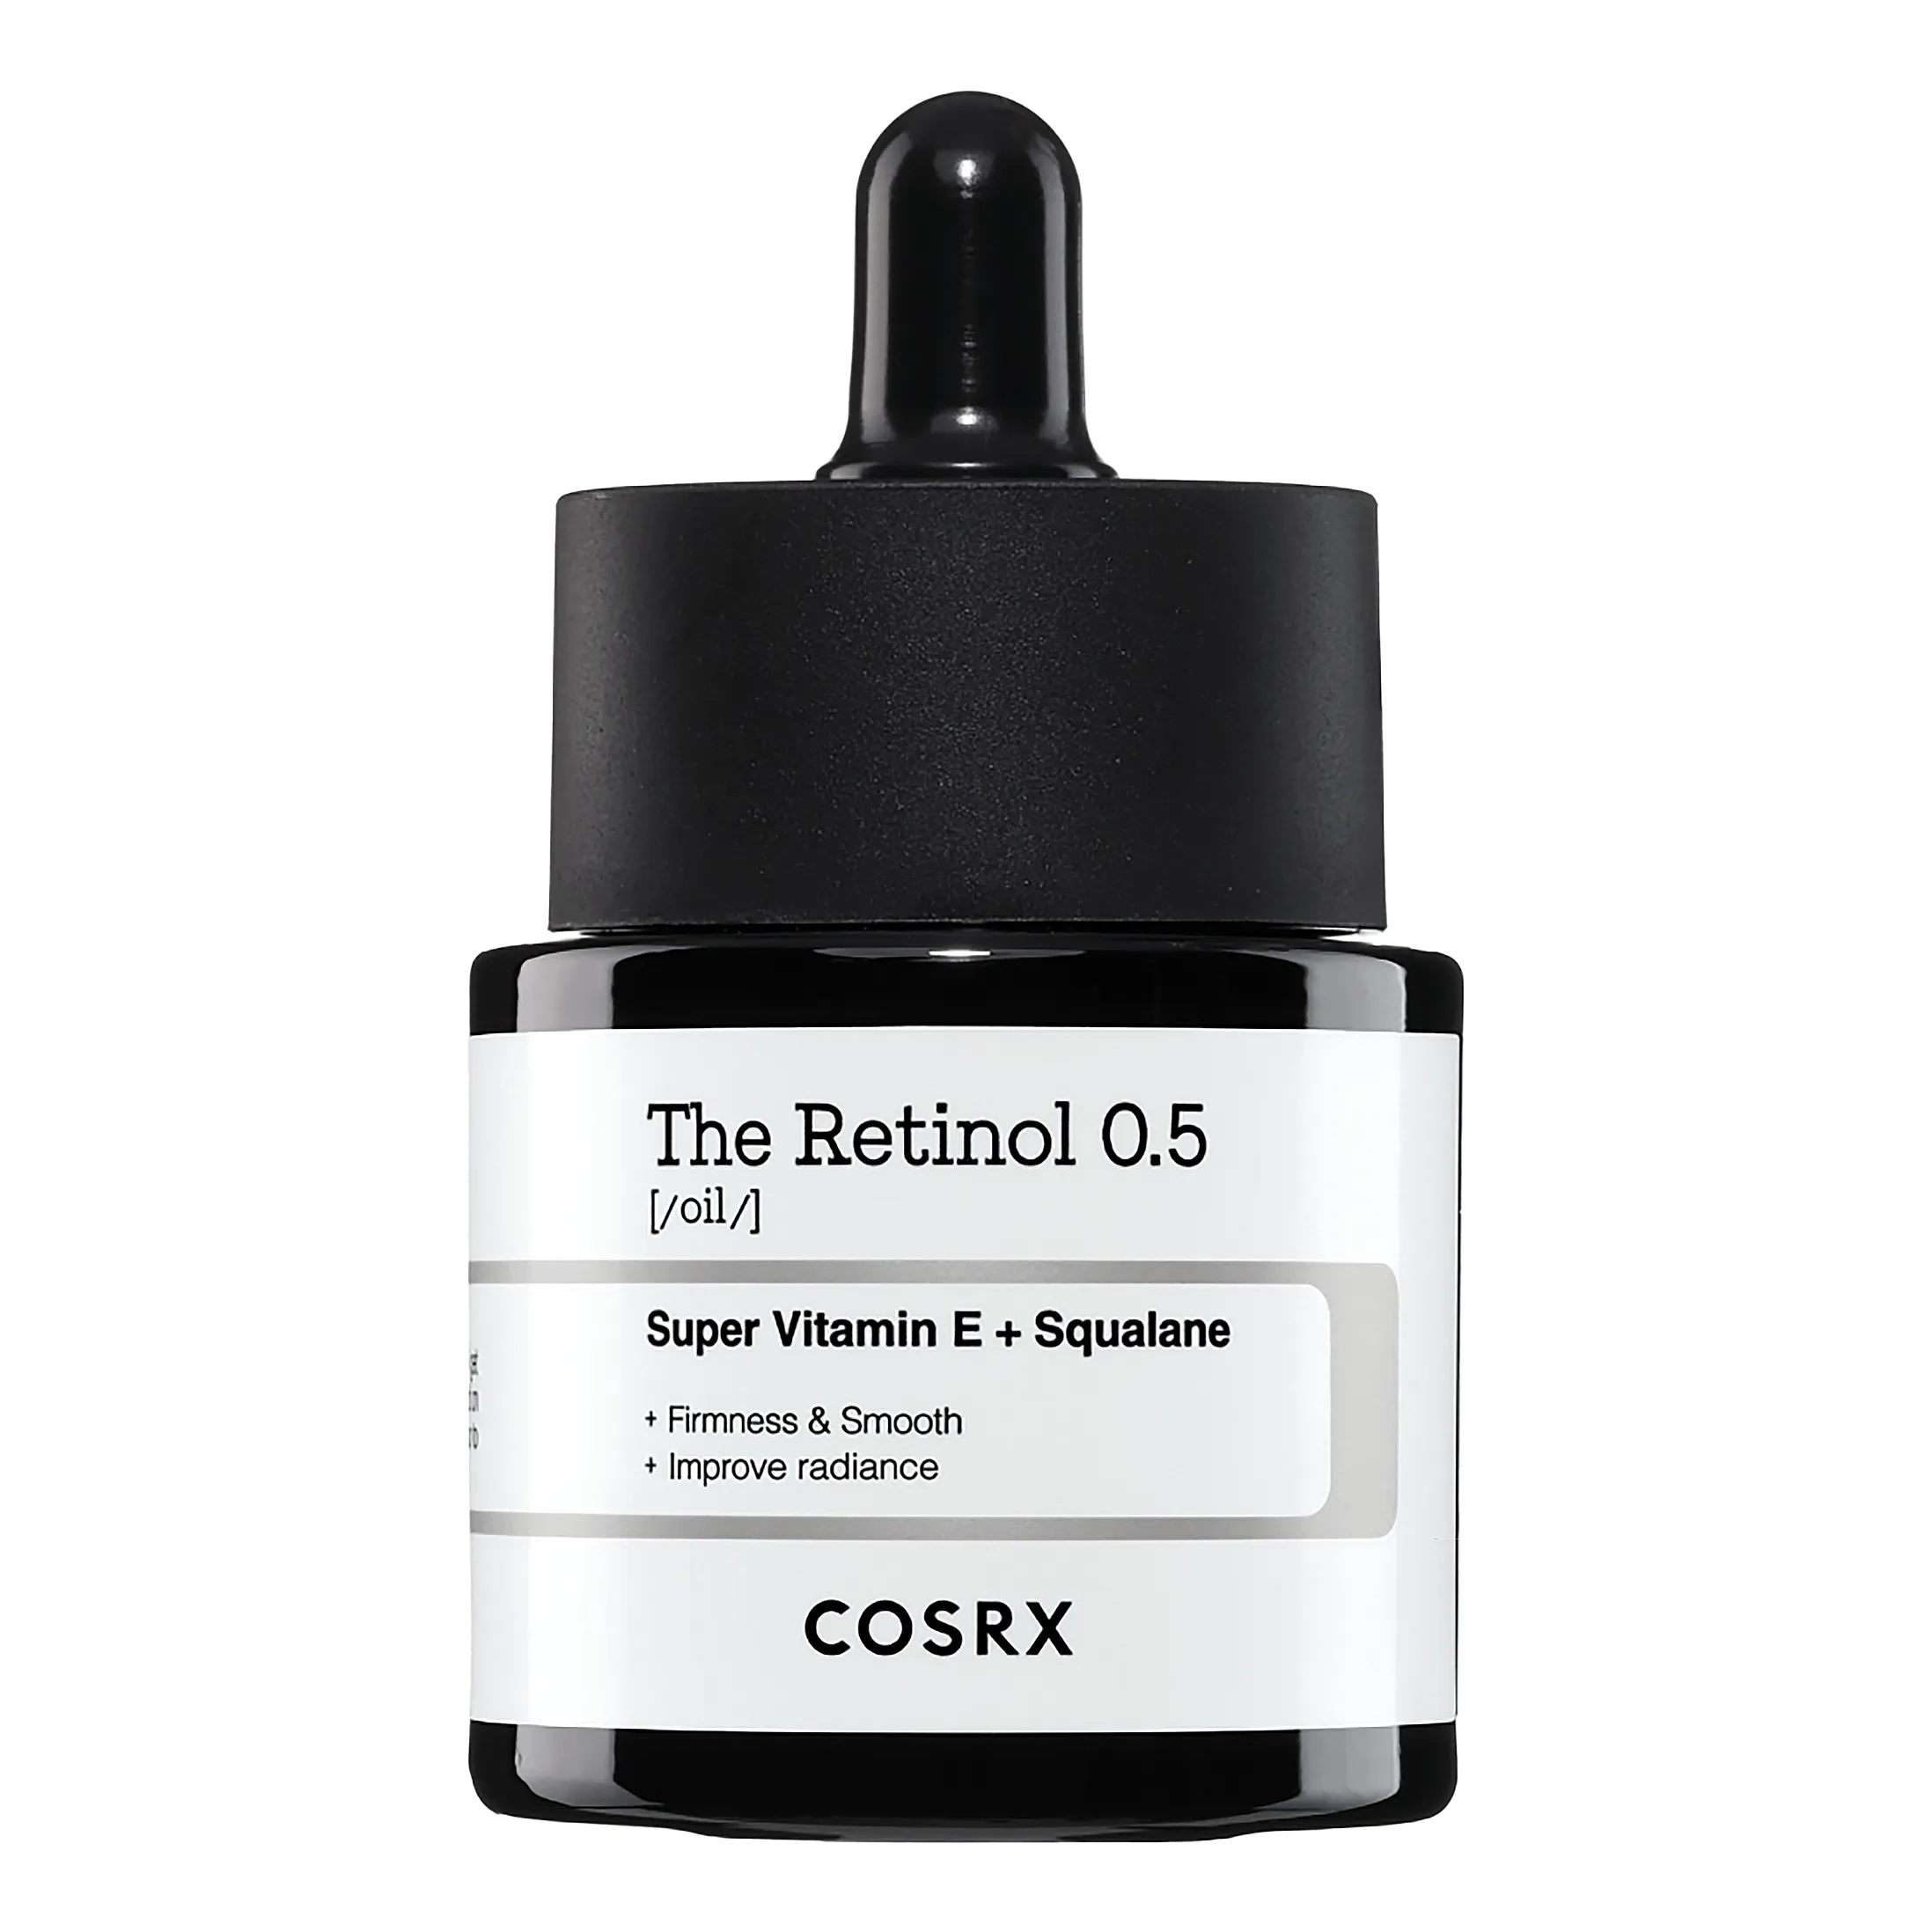 COSRX The Retinol 0.5 Oil 